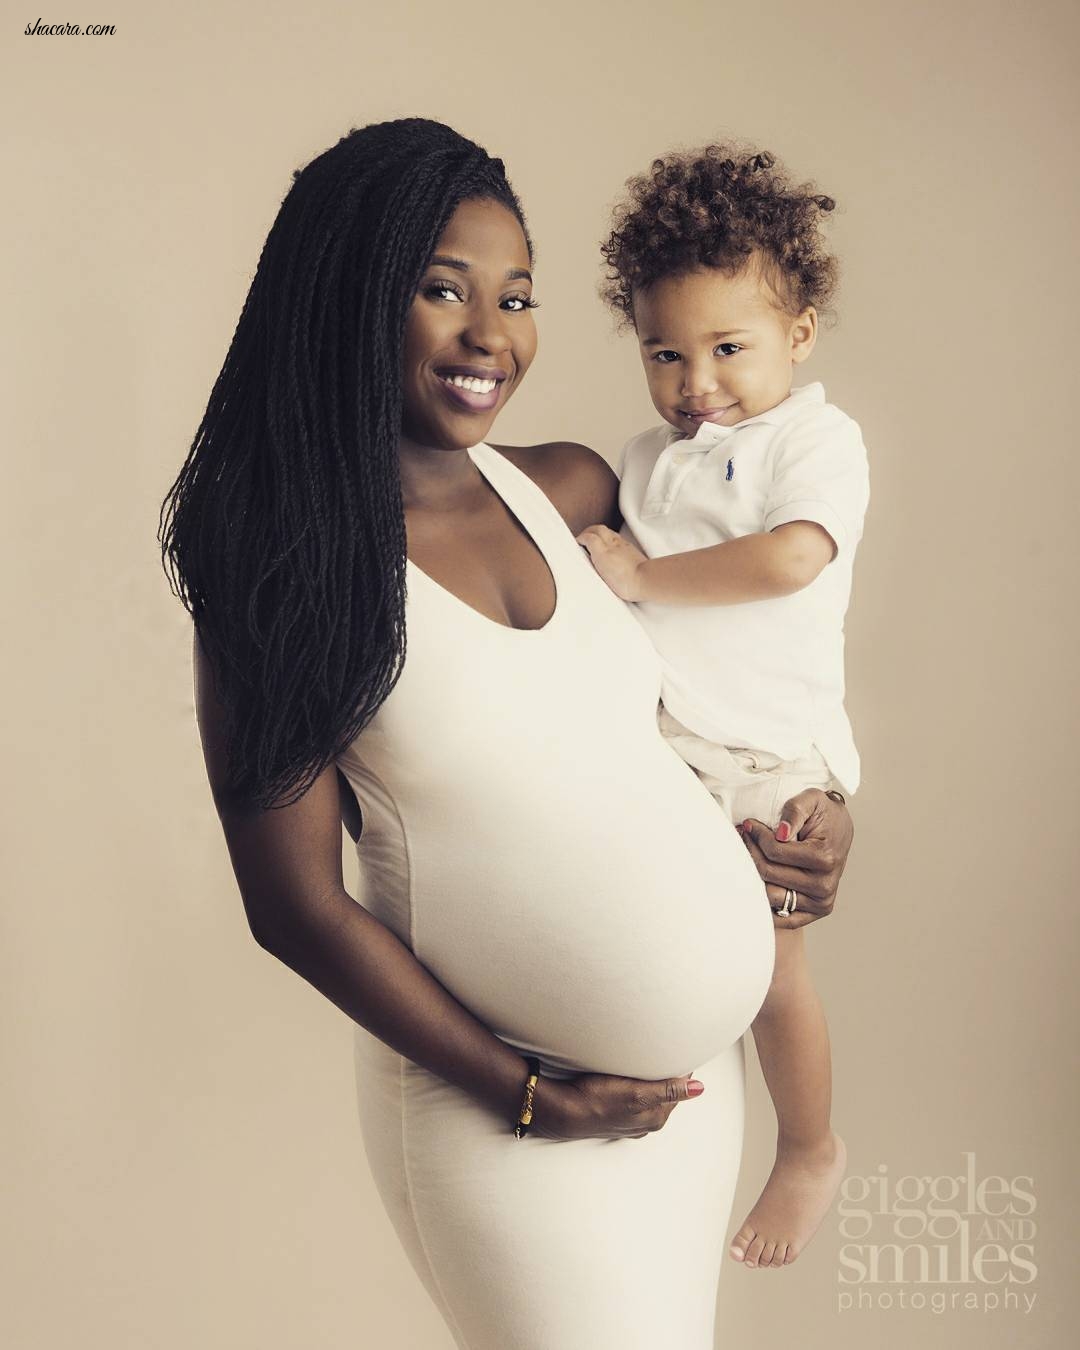 3 Plus 1! See Gorgeous Photos Of Adanna & David’s Maternity Shoot